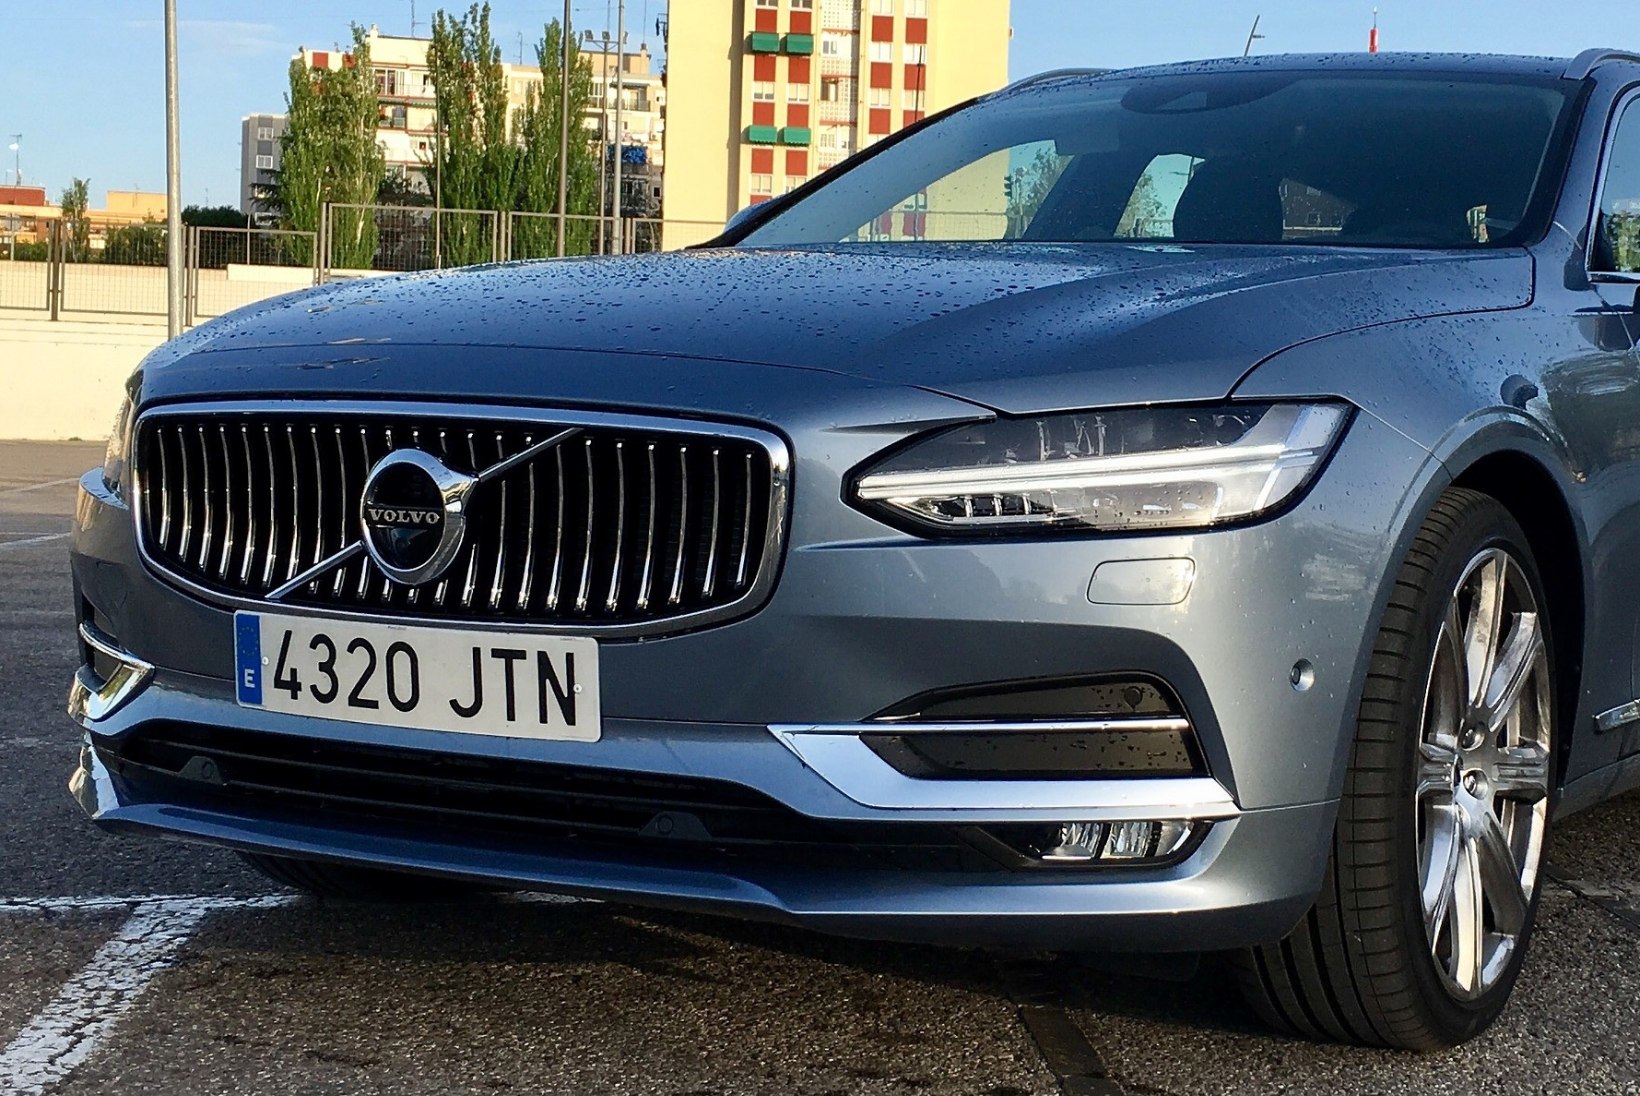 TEINE TASE | „Volvo on turvalisuse etalon, na**i!“